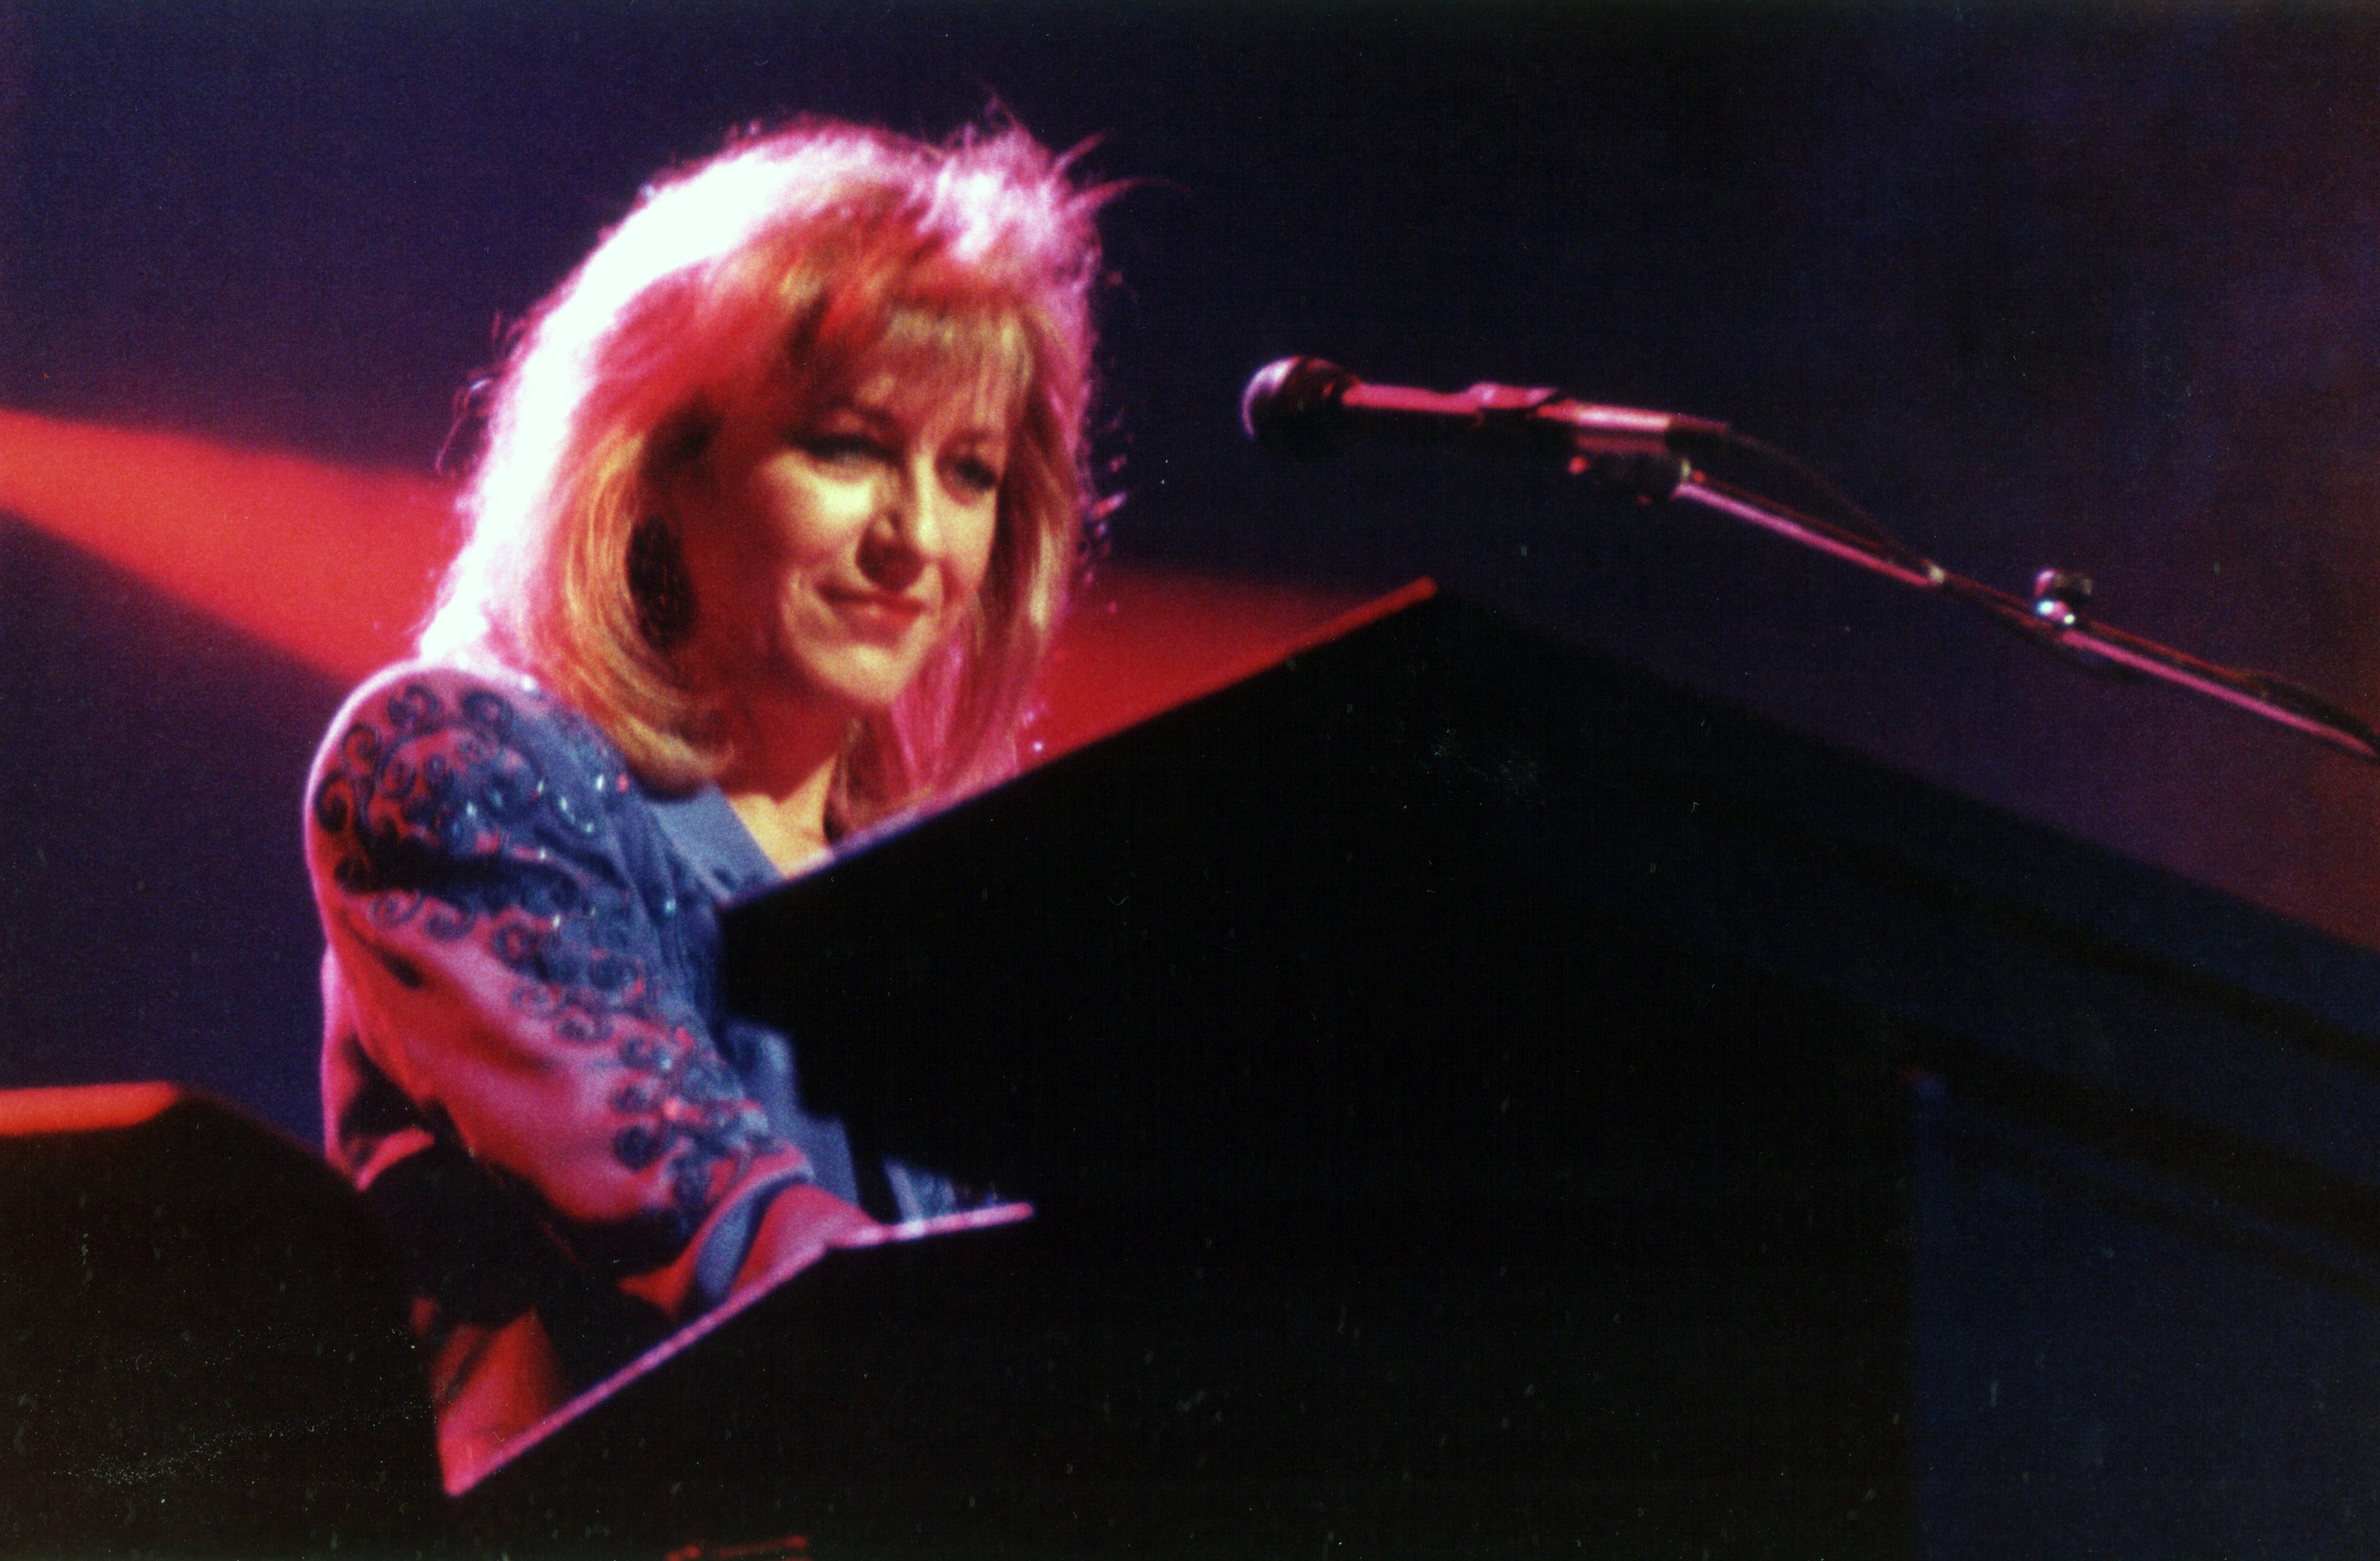 Fleetwood Mac’s Christine McVie ‘Loved’ To Play Practical Jokes on People